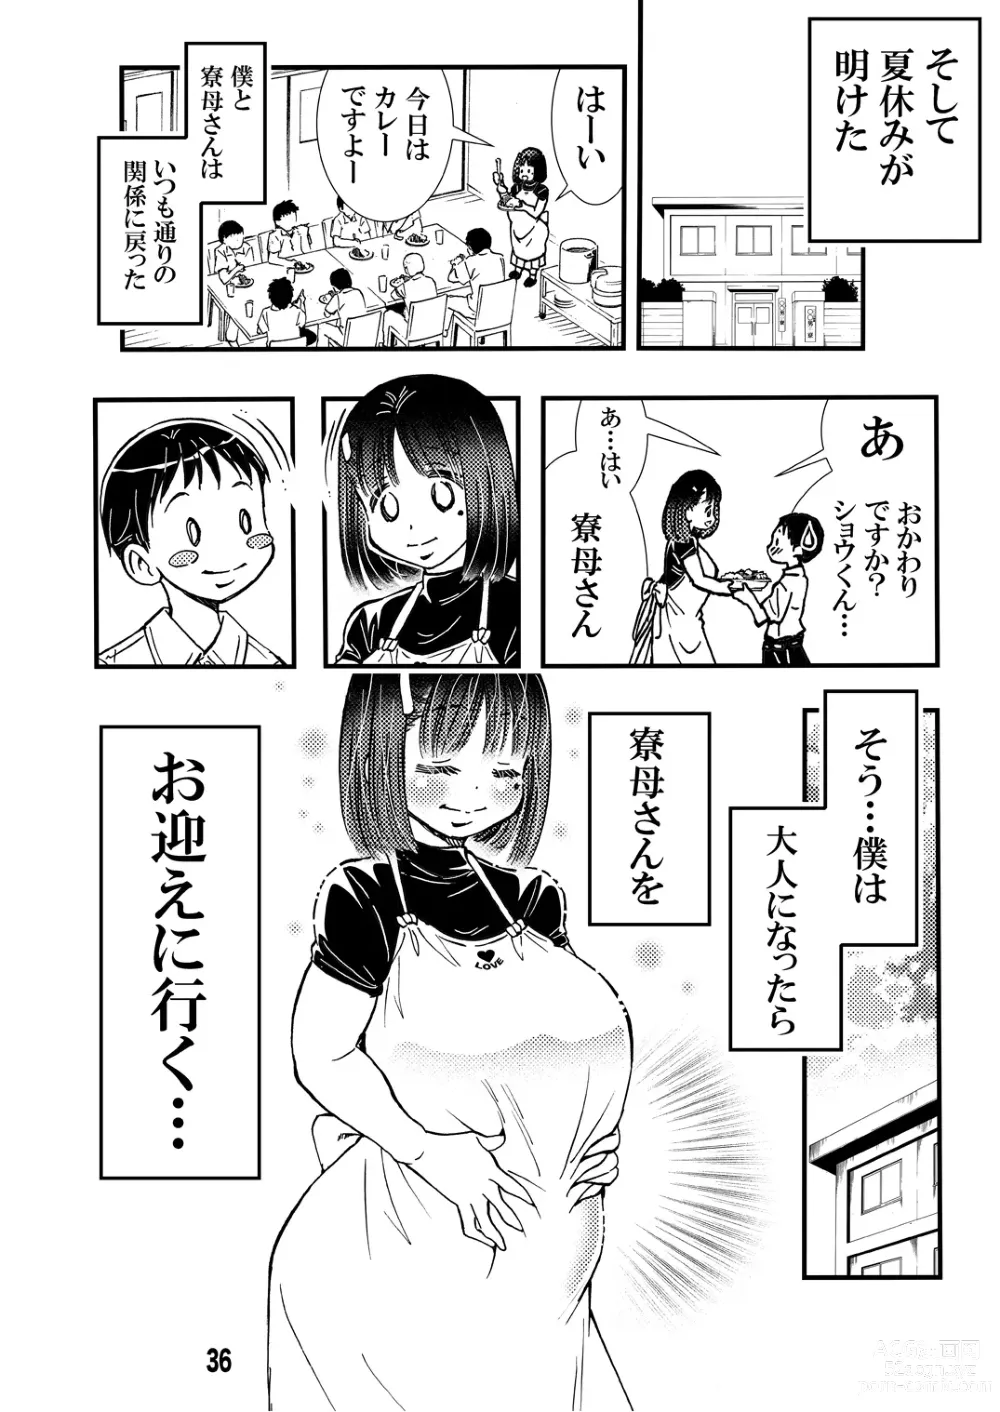 Page 36 of doujinshi Ryoubo-san no Oppai wa Kao yori Ookii